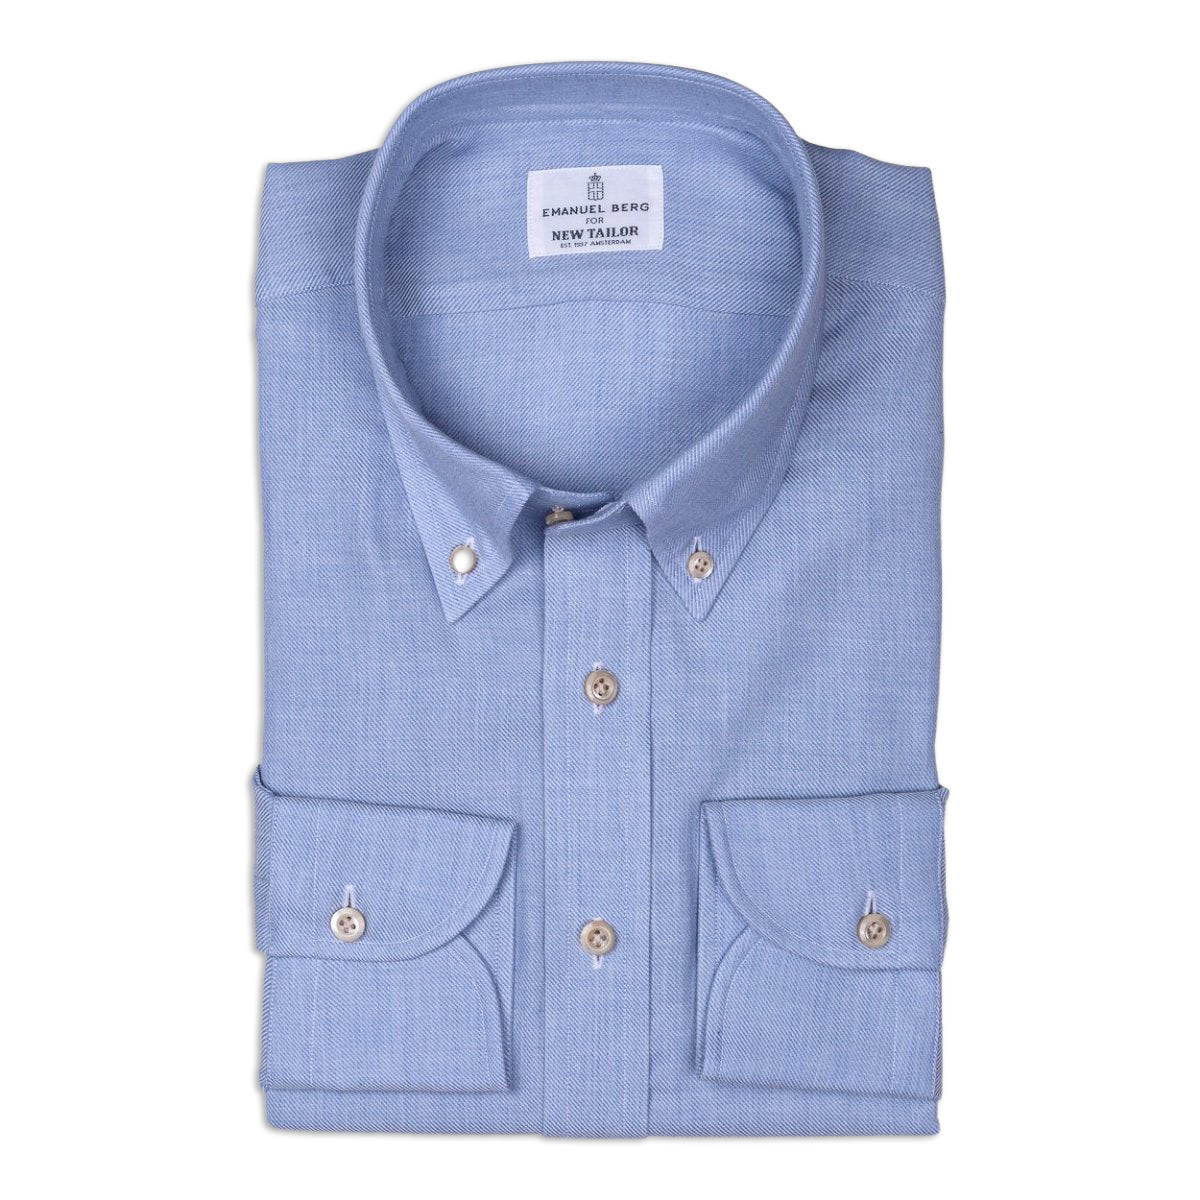 Emanuel Berg - Overhemd Lichtblauw Twill Katoen/Cashmere, Shirt | NEW TAILOR Webshop